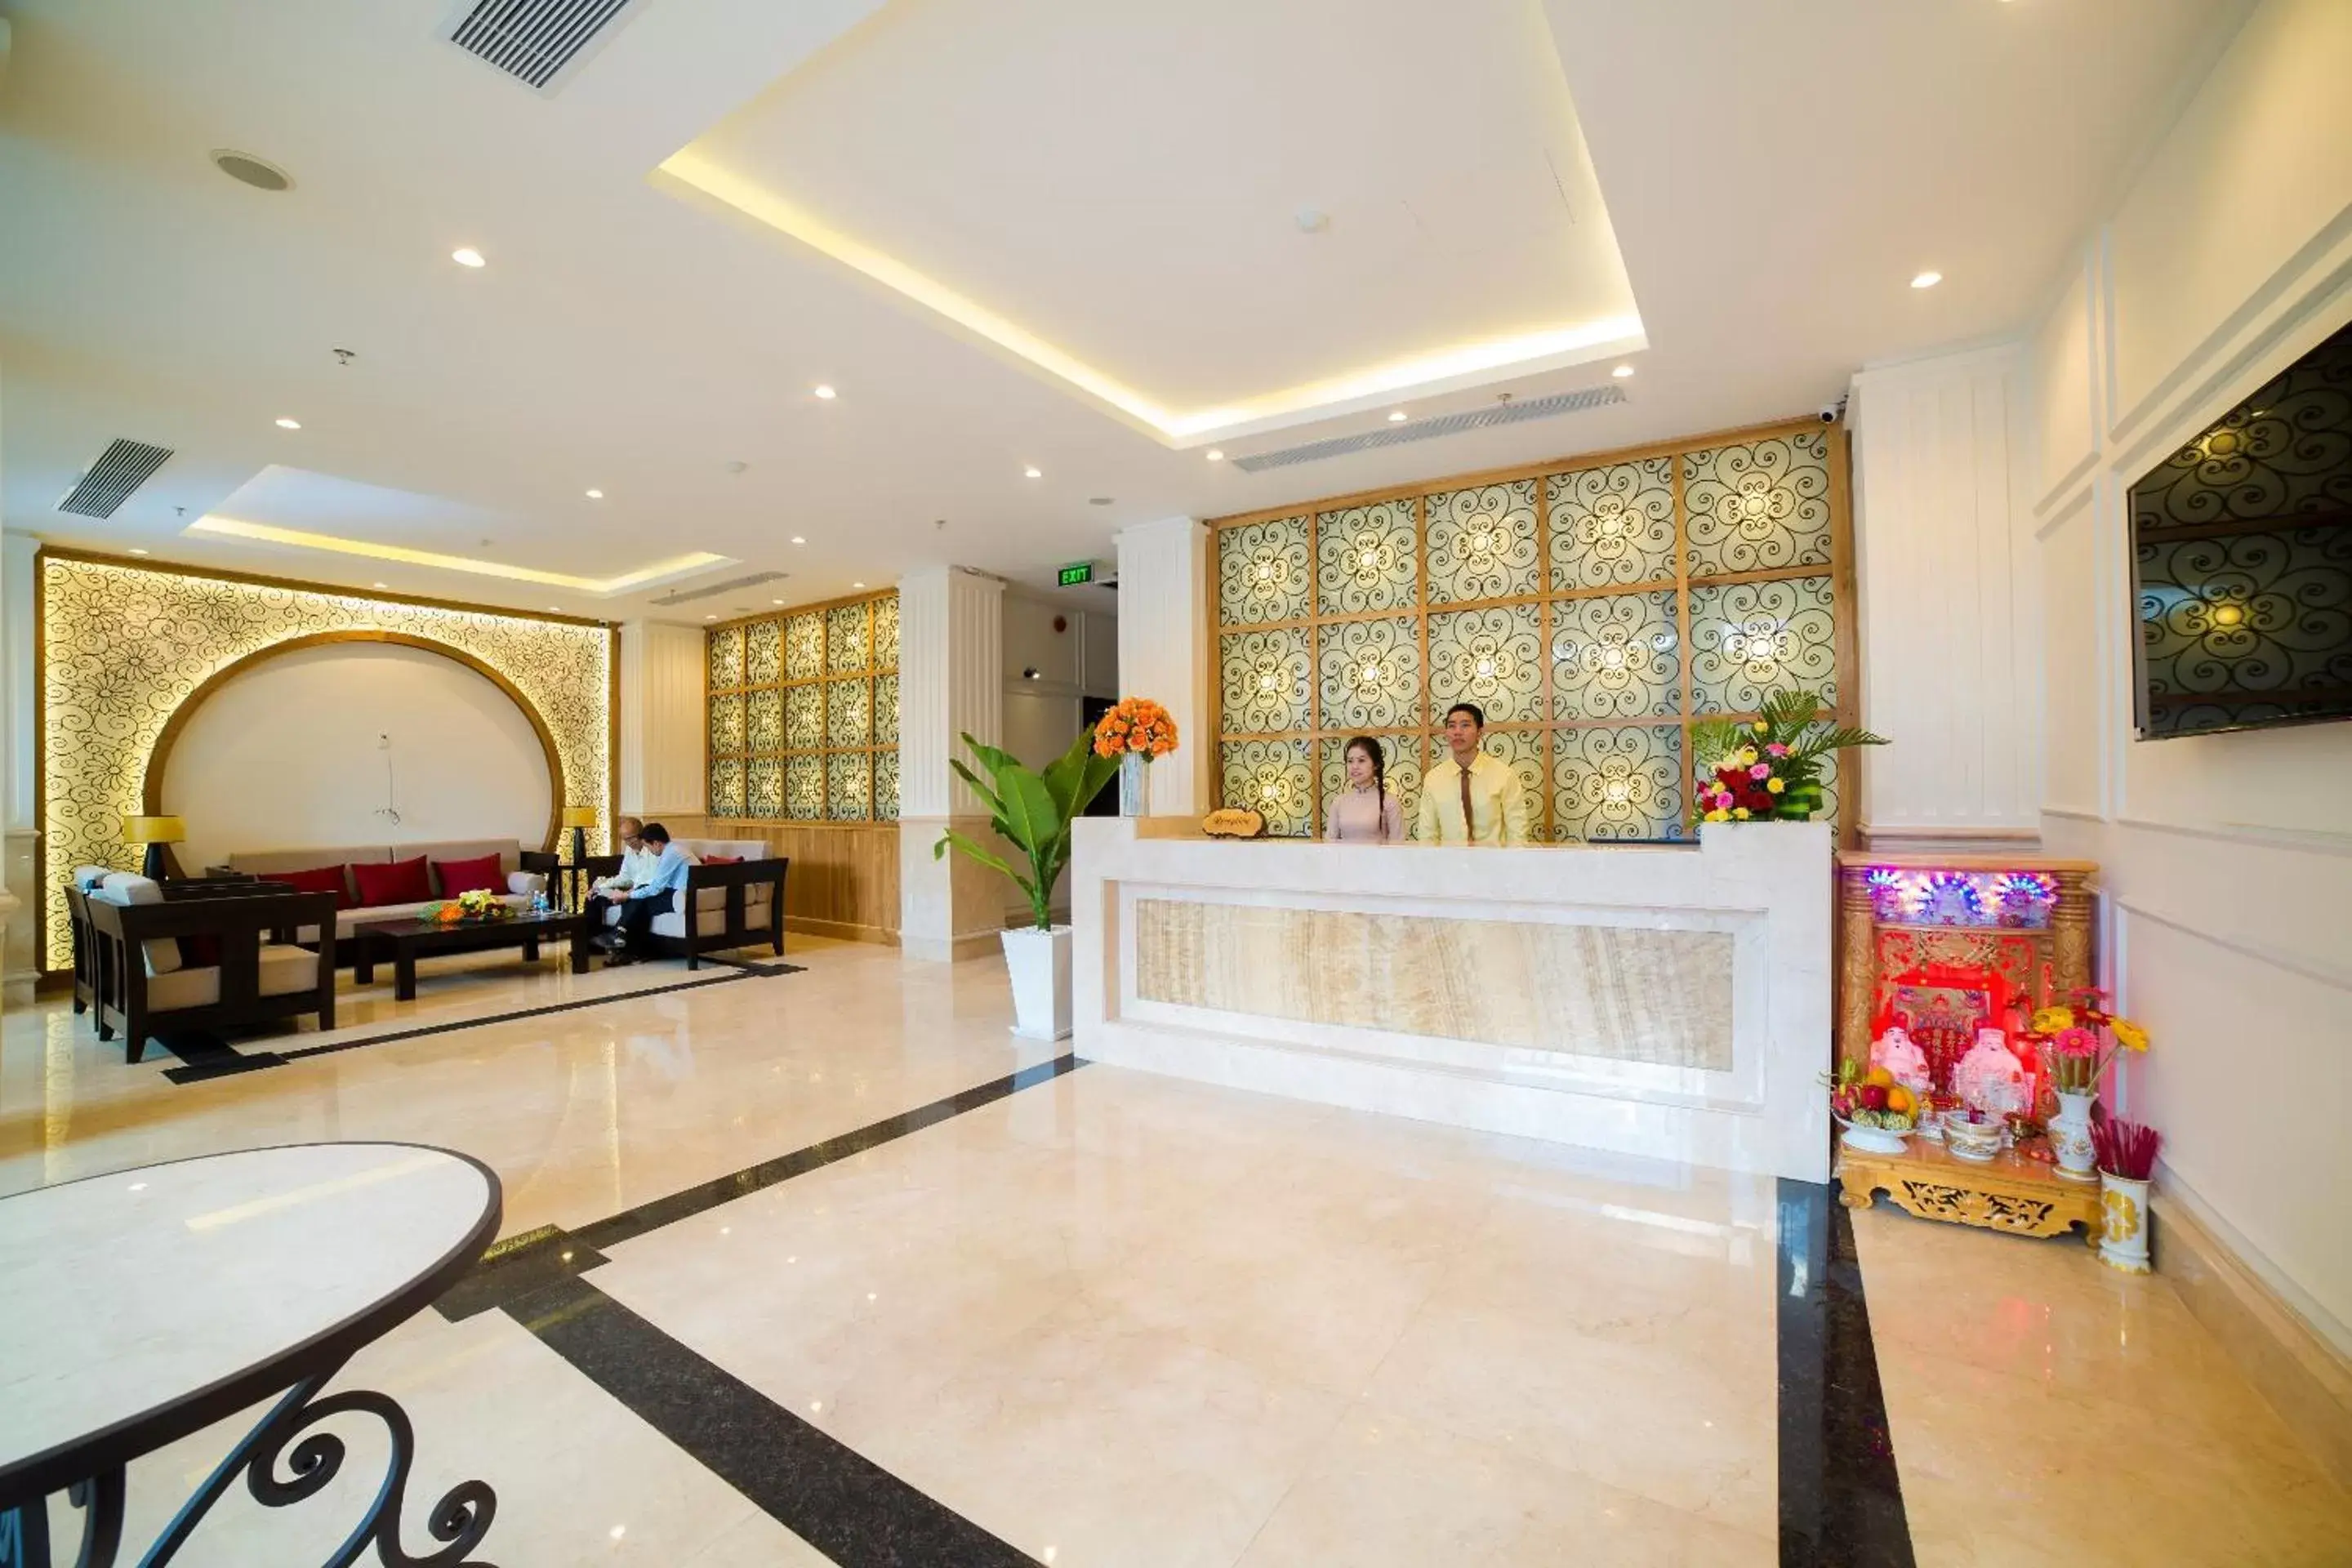 Lobby or reception in Edele Hotel